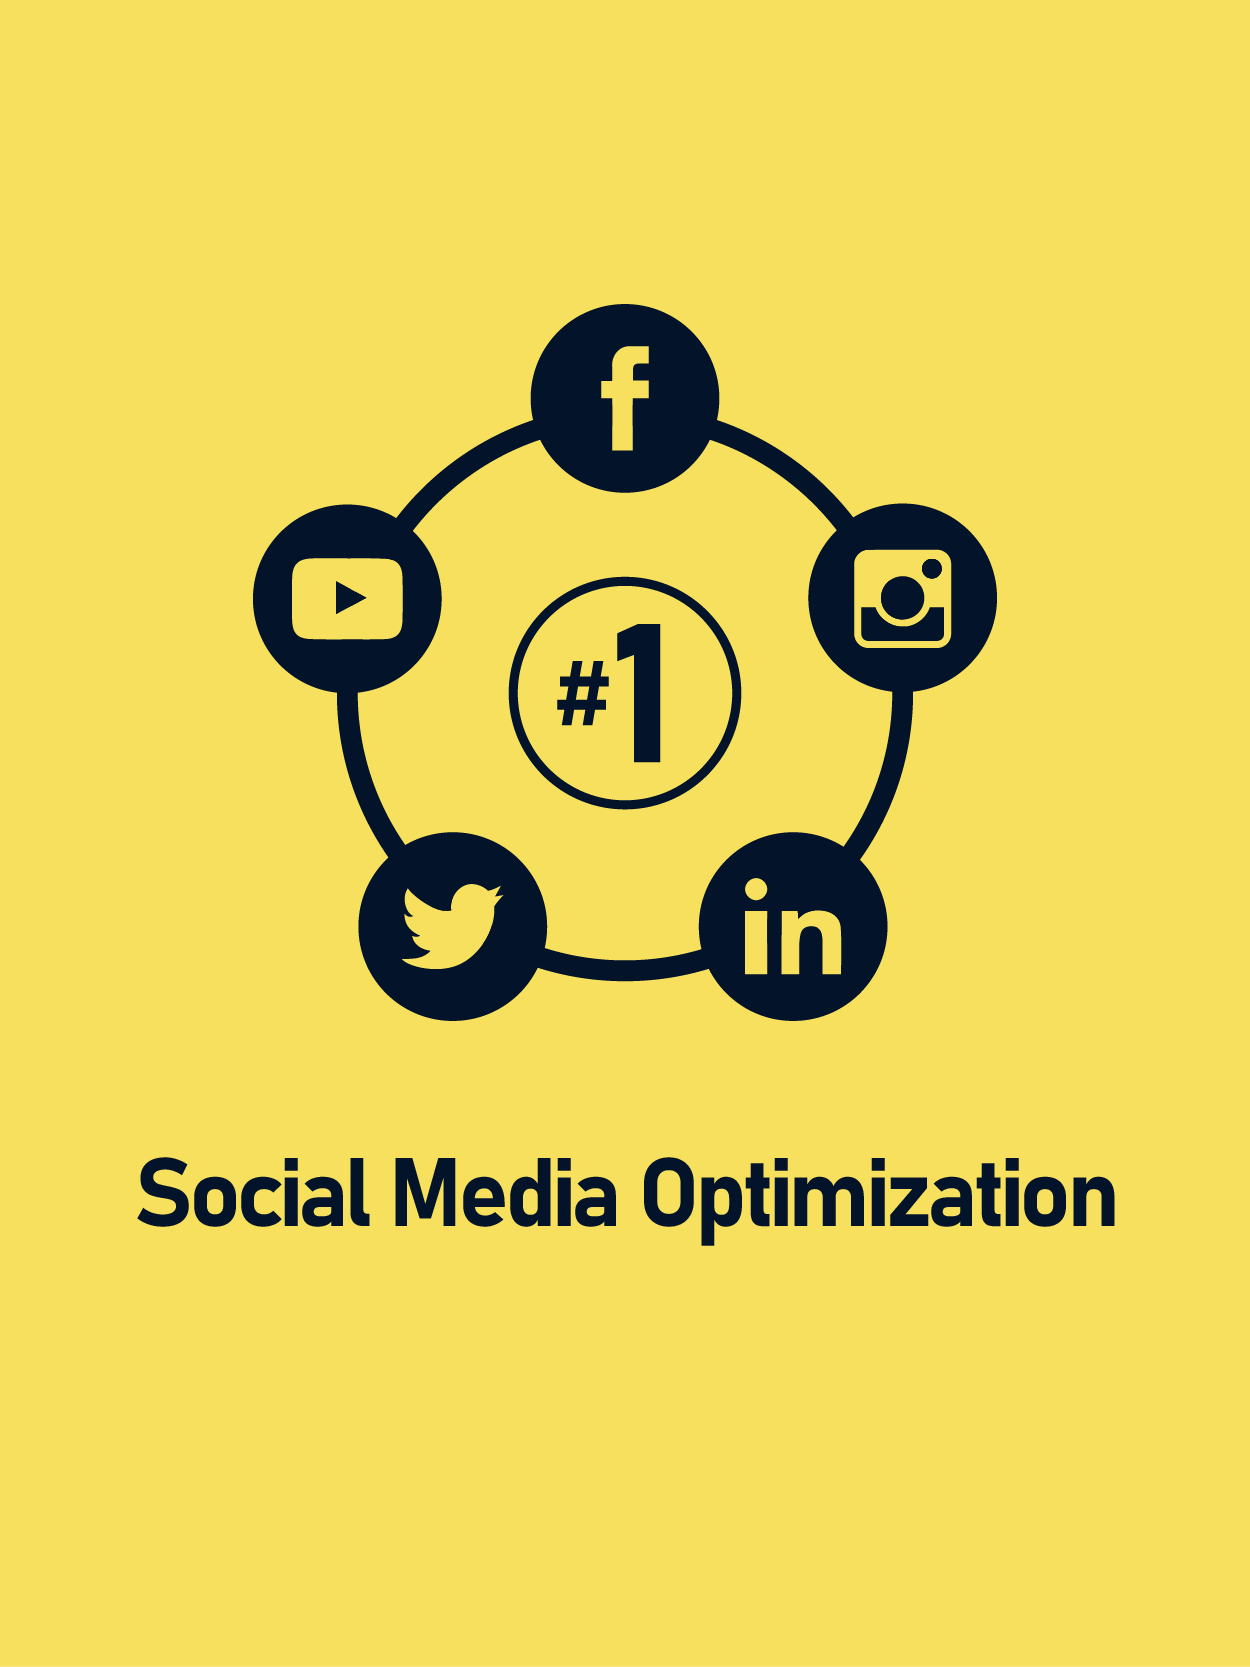 Socil media optimization